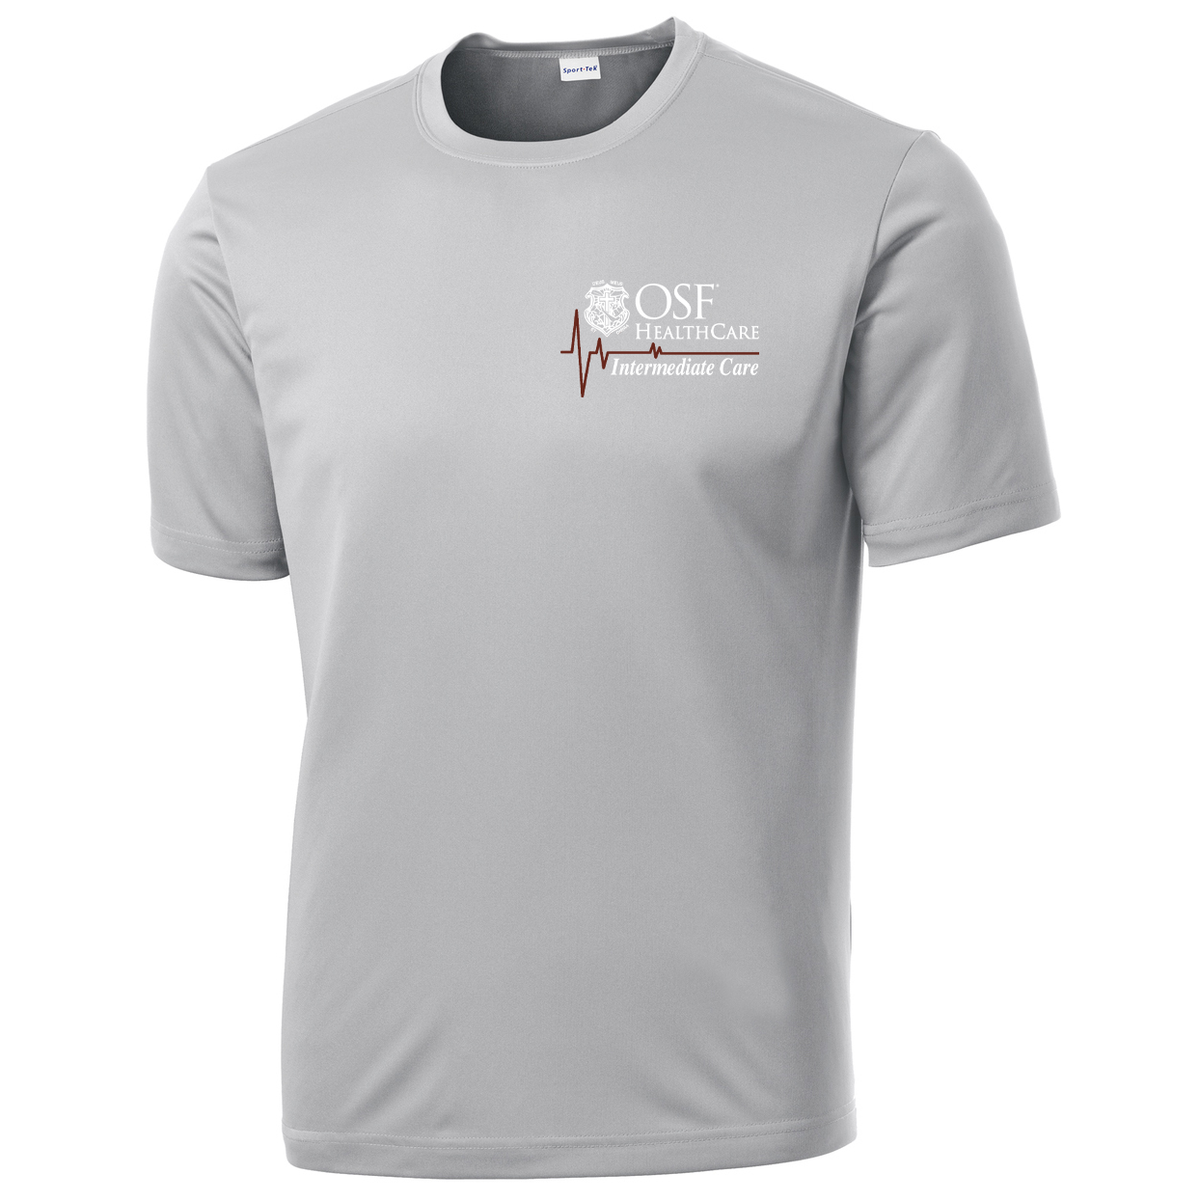 OSF Healthcare IMCU Performance T-Shirt